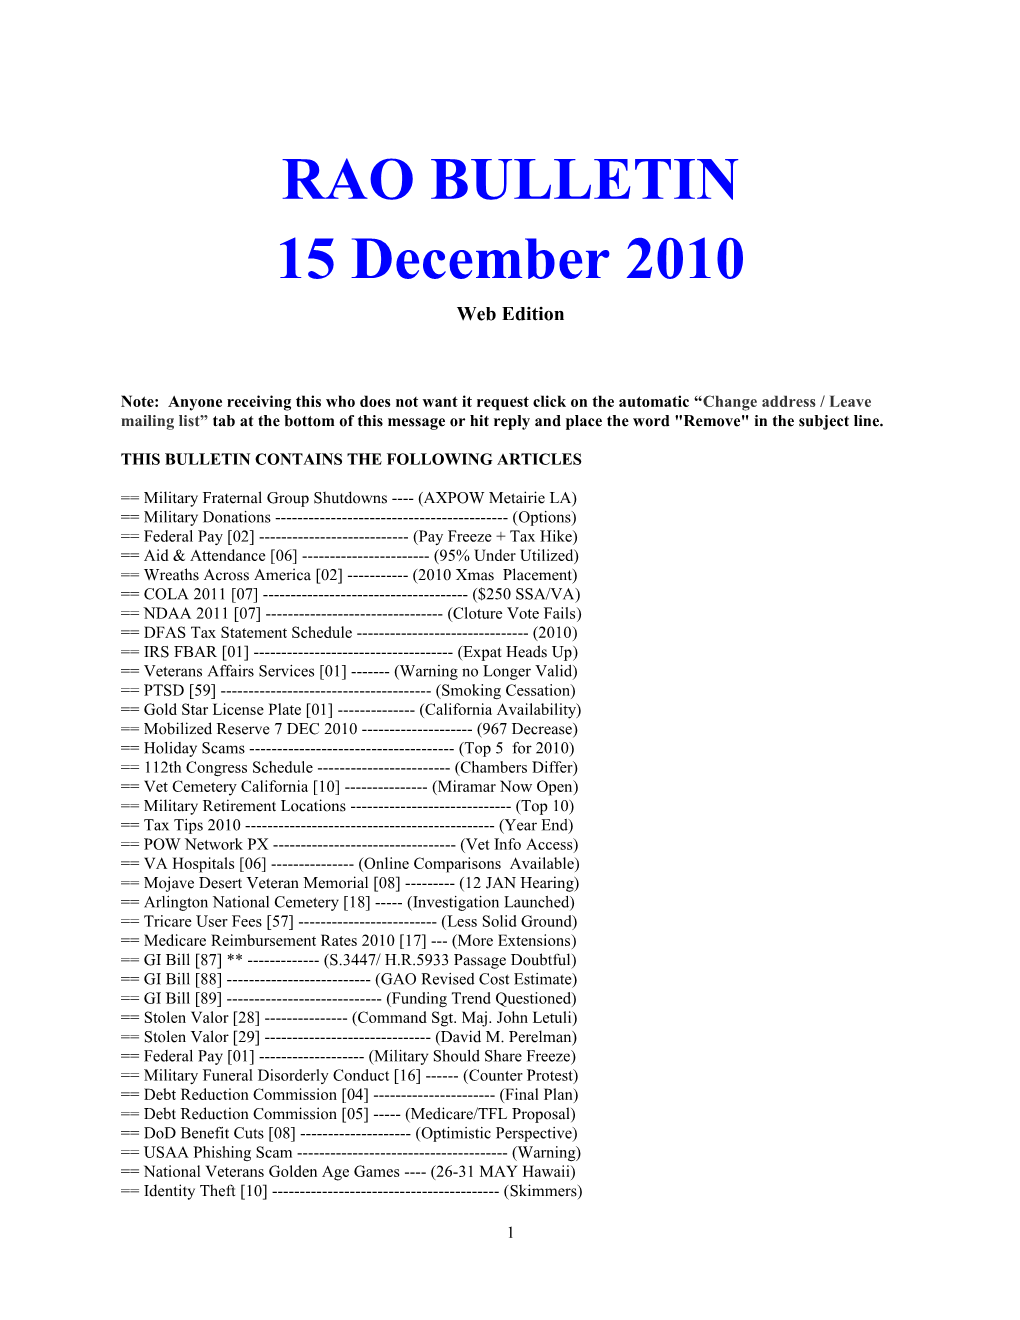 RAO Bulletin Update 15 Oct 2007